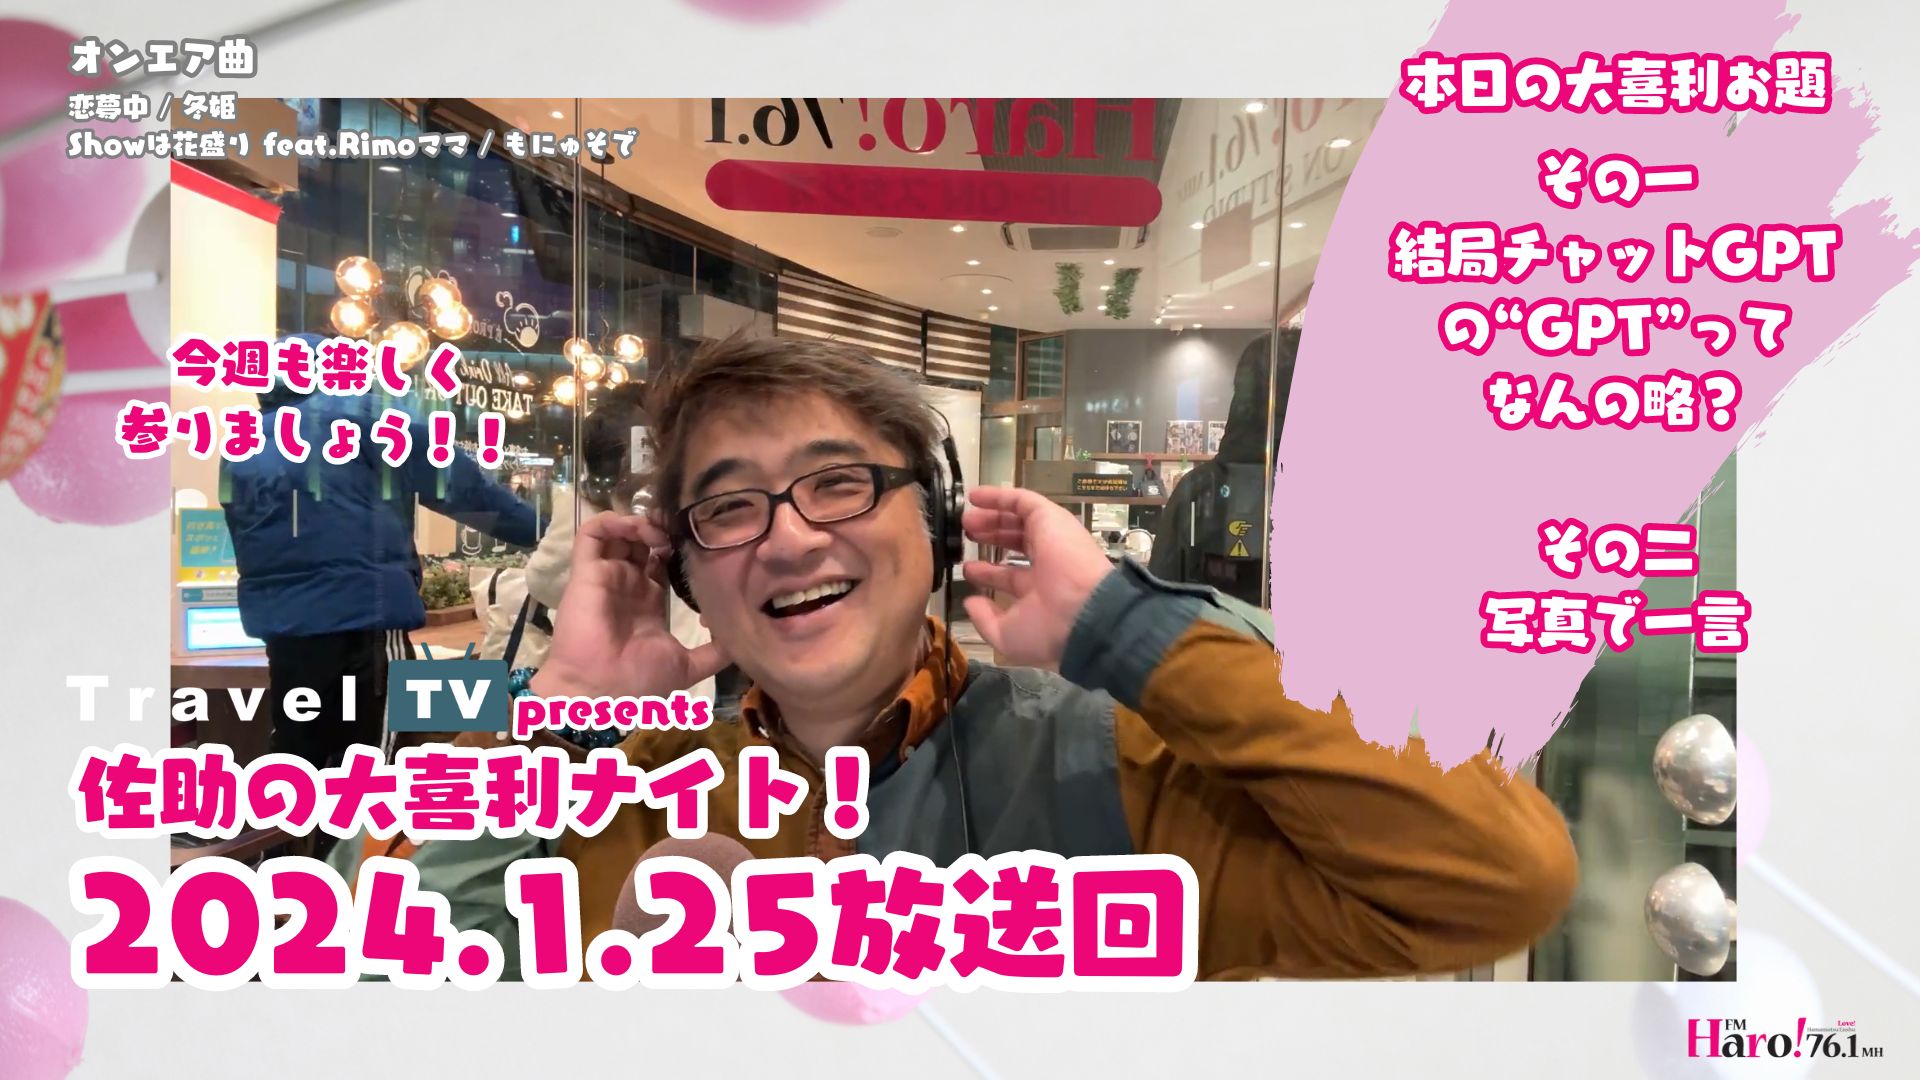 Travel TV presents 佐助の大喜利ナイト！＜2024.1.25放送回＞